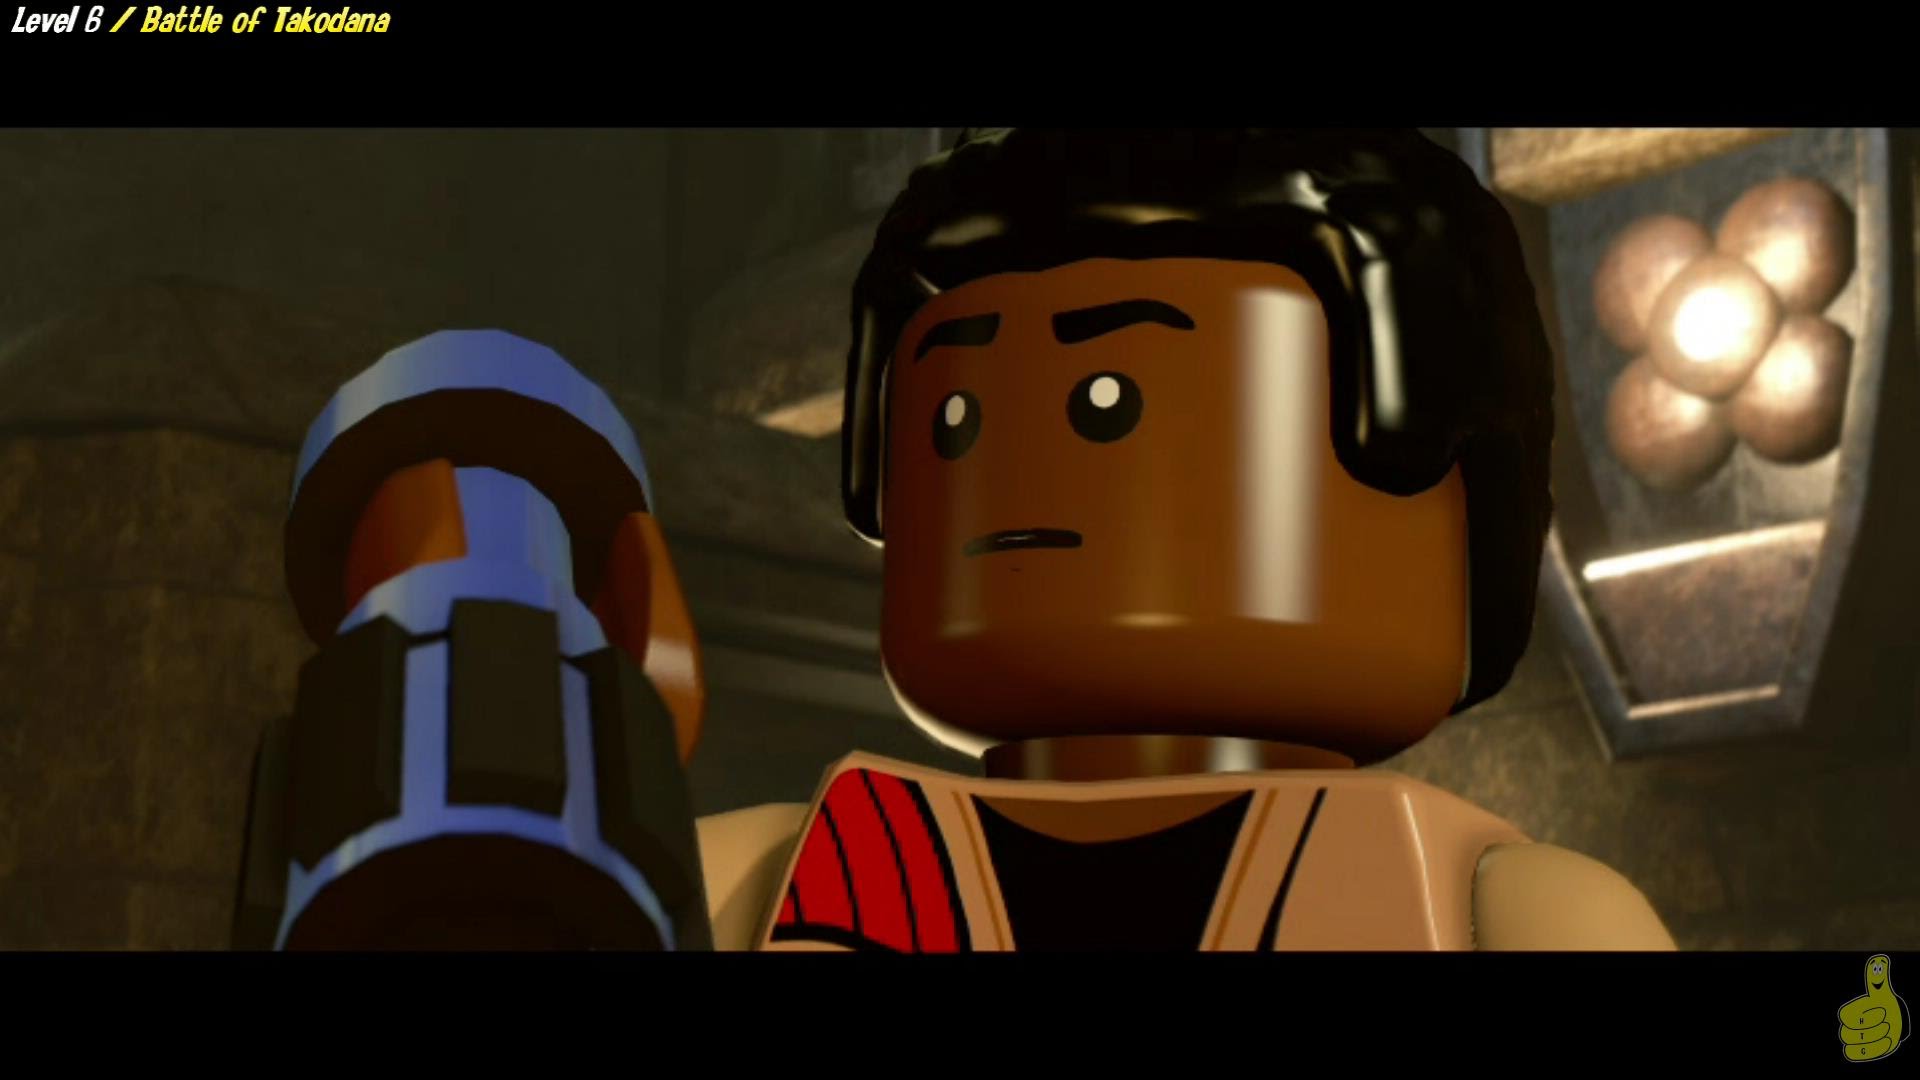 Lego Star Wars The Force Awakens: Lvl 6 / Battle of Takodana STORY – HTG